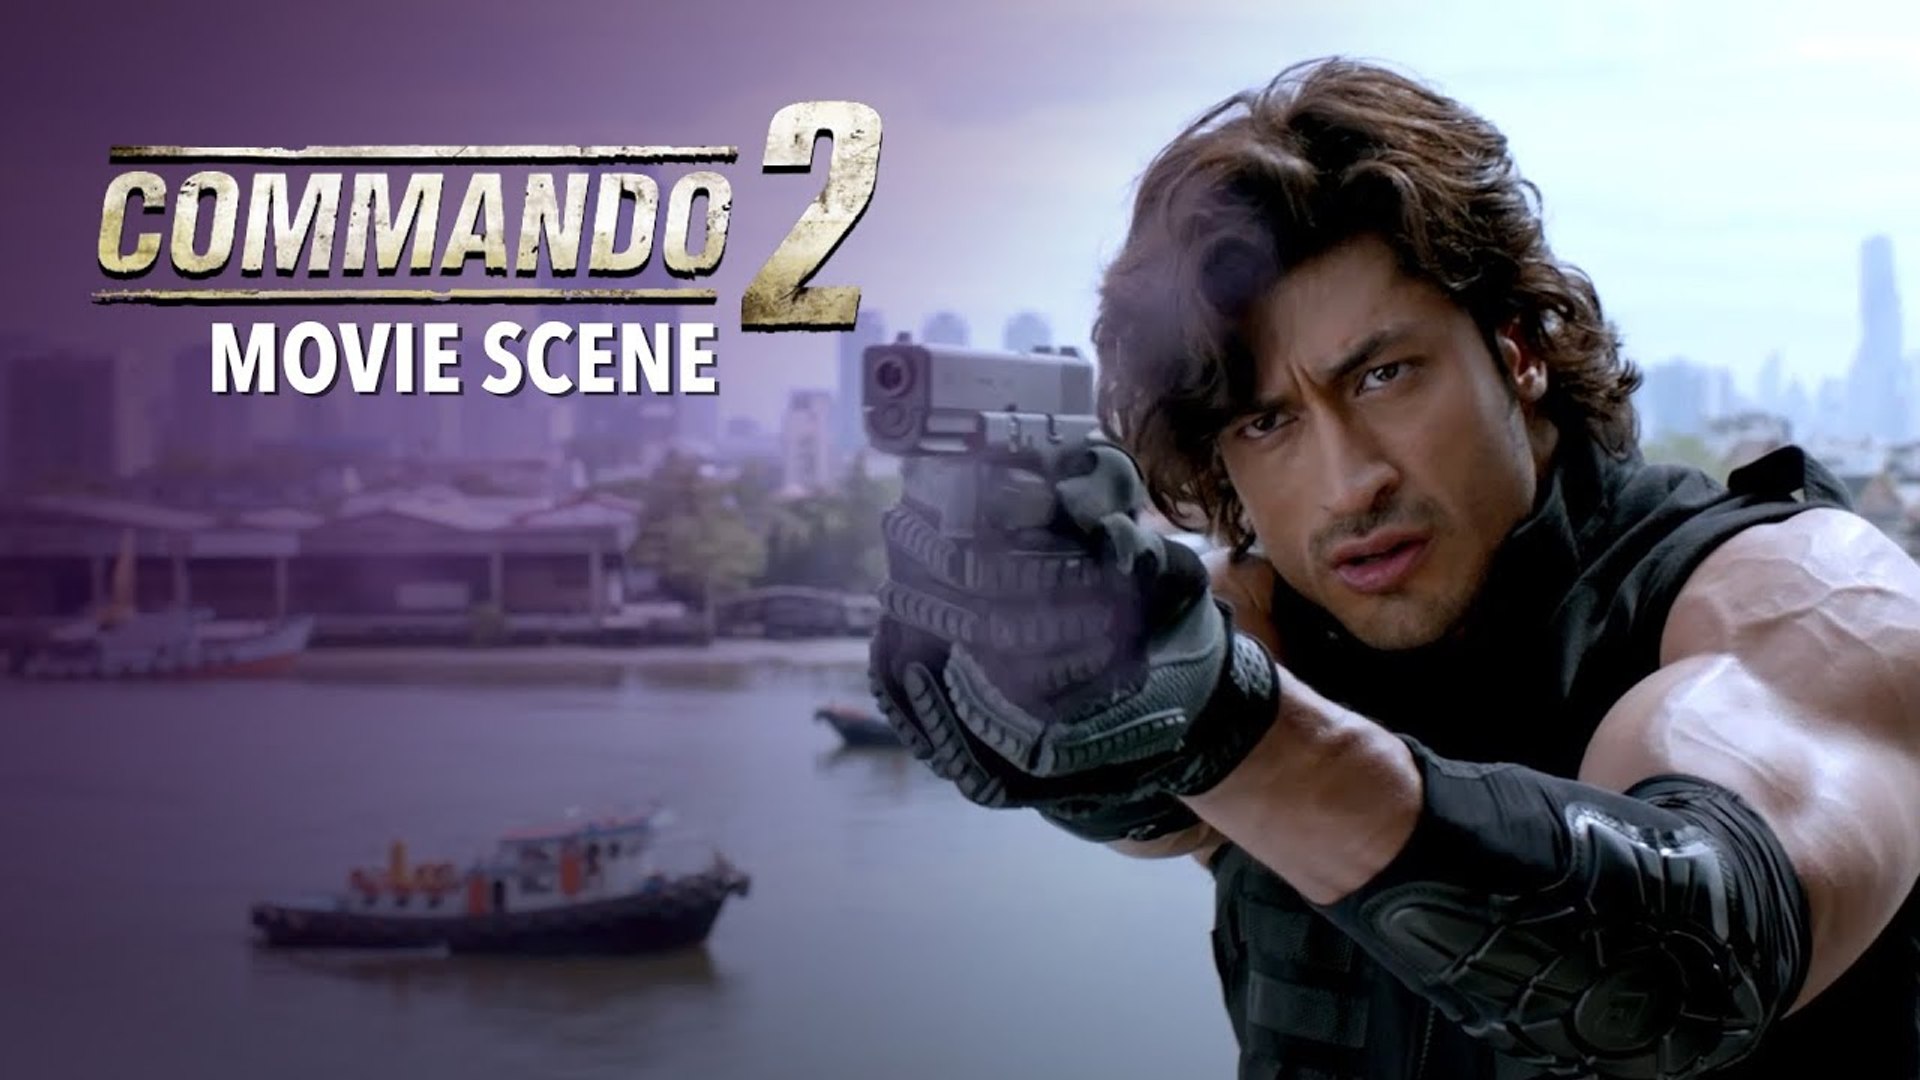 Vidyut Jammwal Takes On Goons In Taiwan, Commando 2, Movie Scene